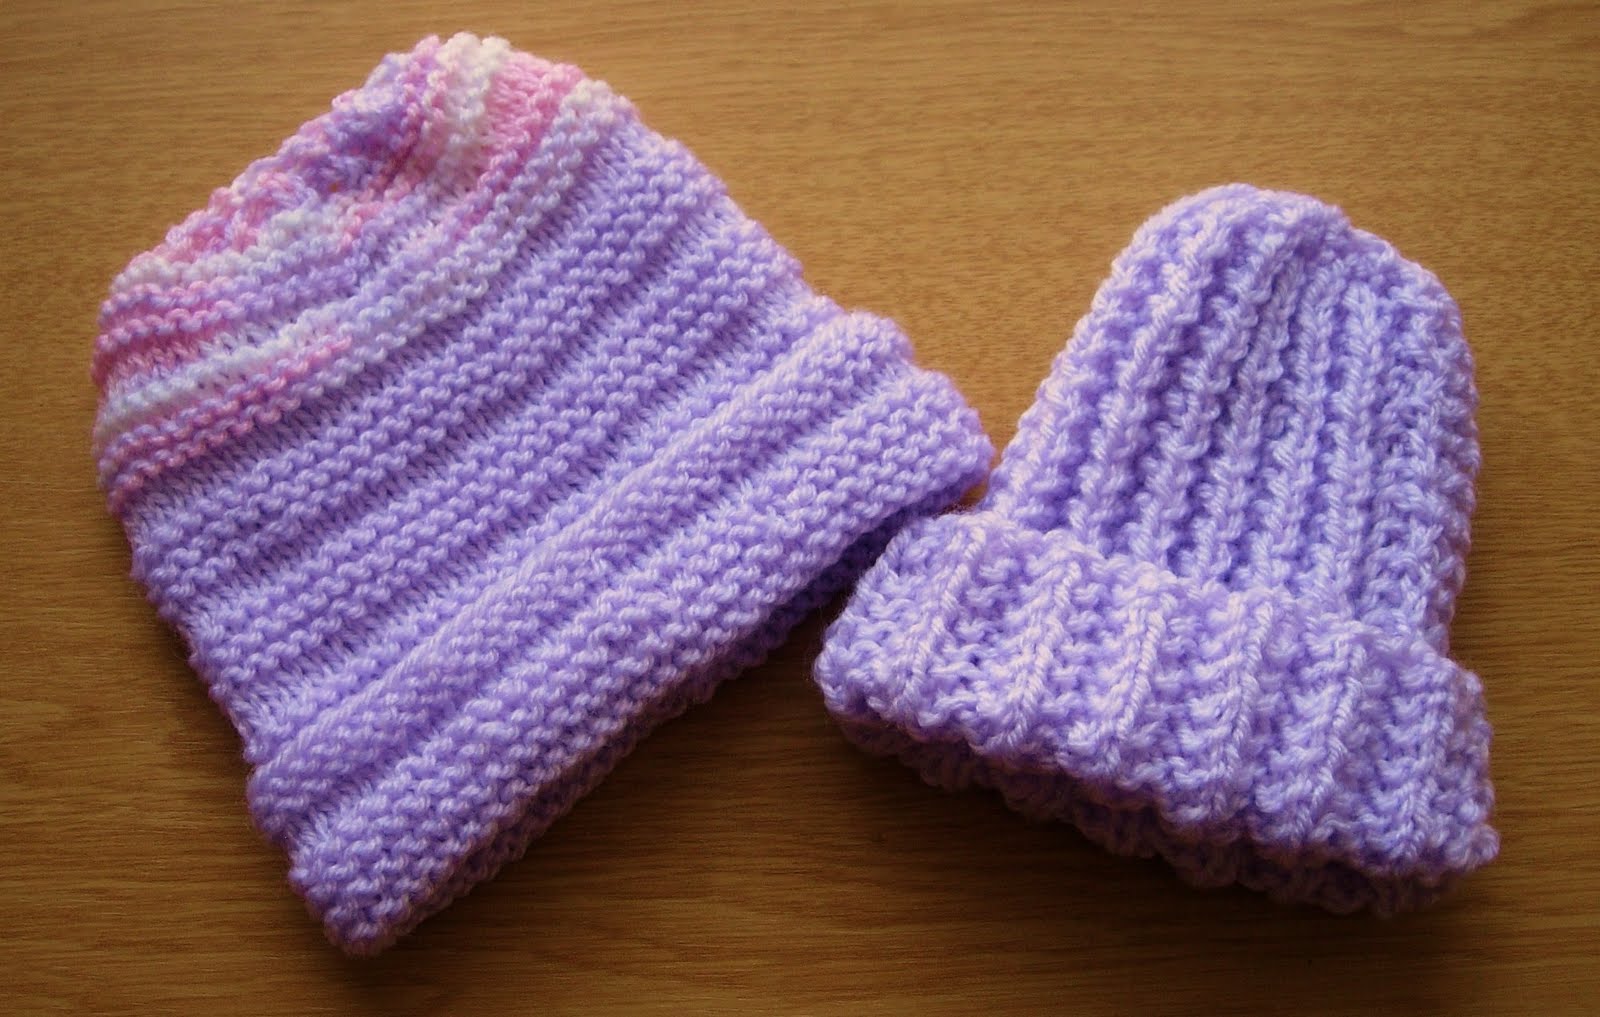 knitting baby hat pattern | eBay - Electronics, Cars, Fashion